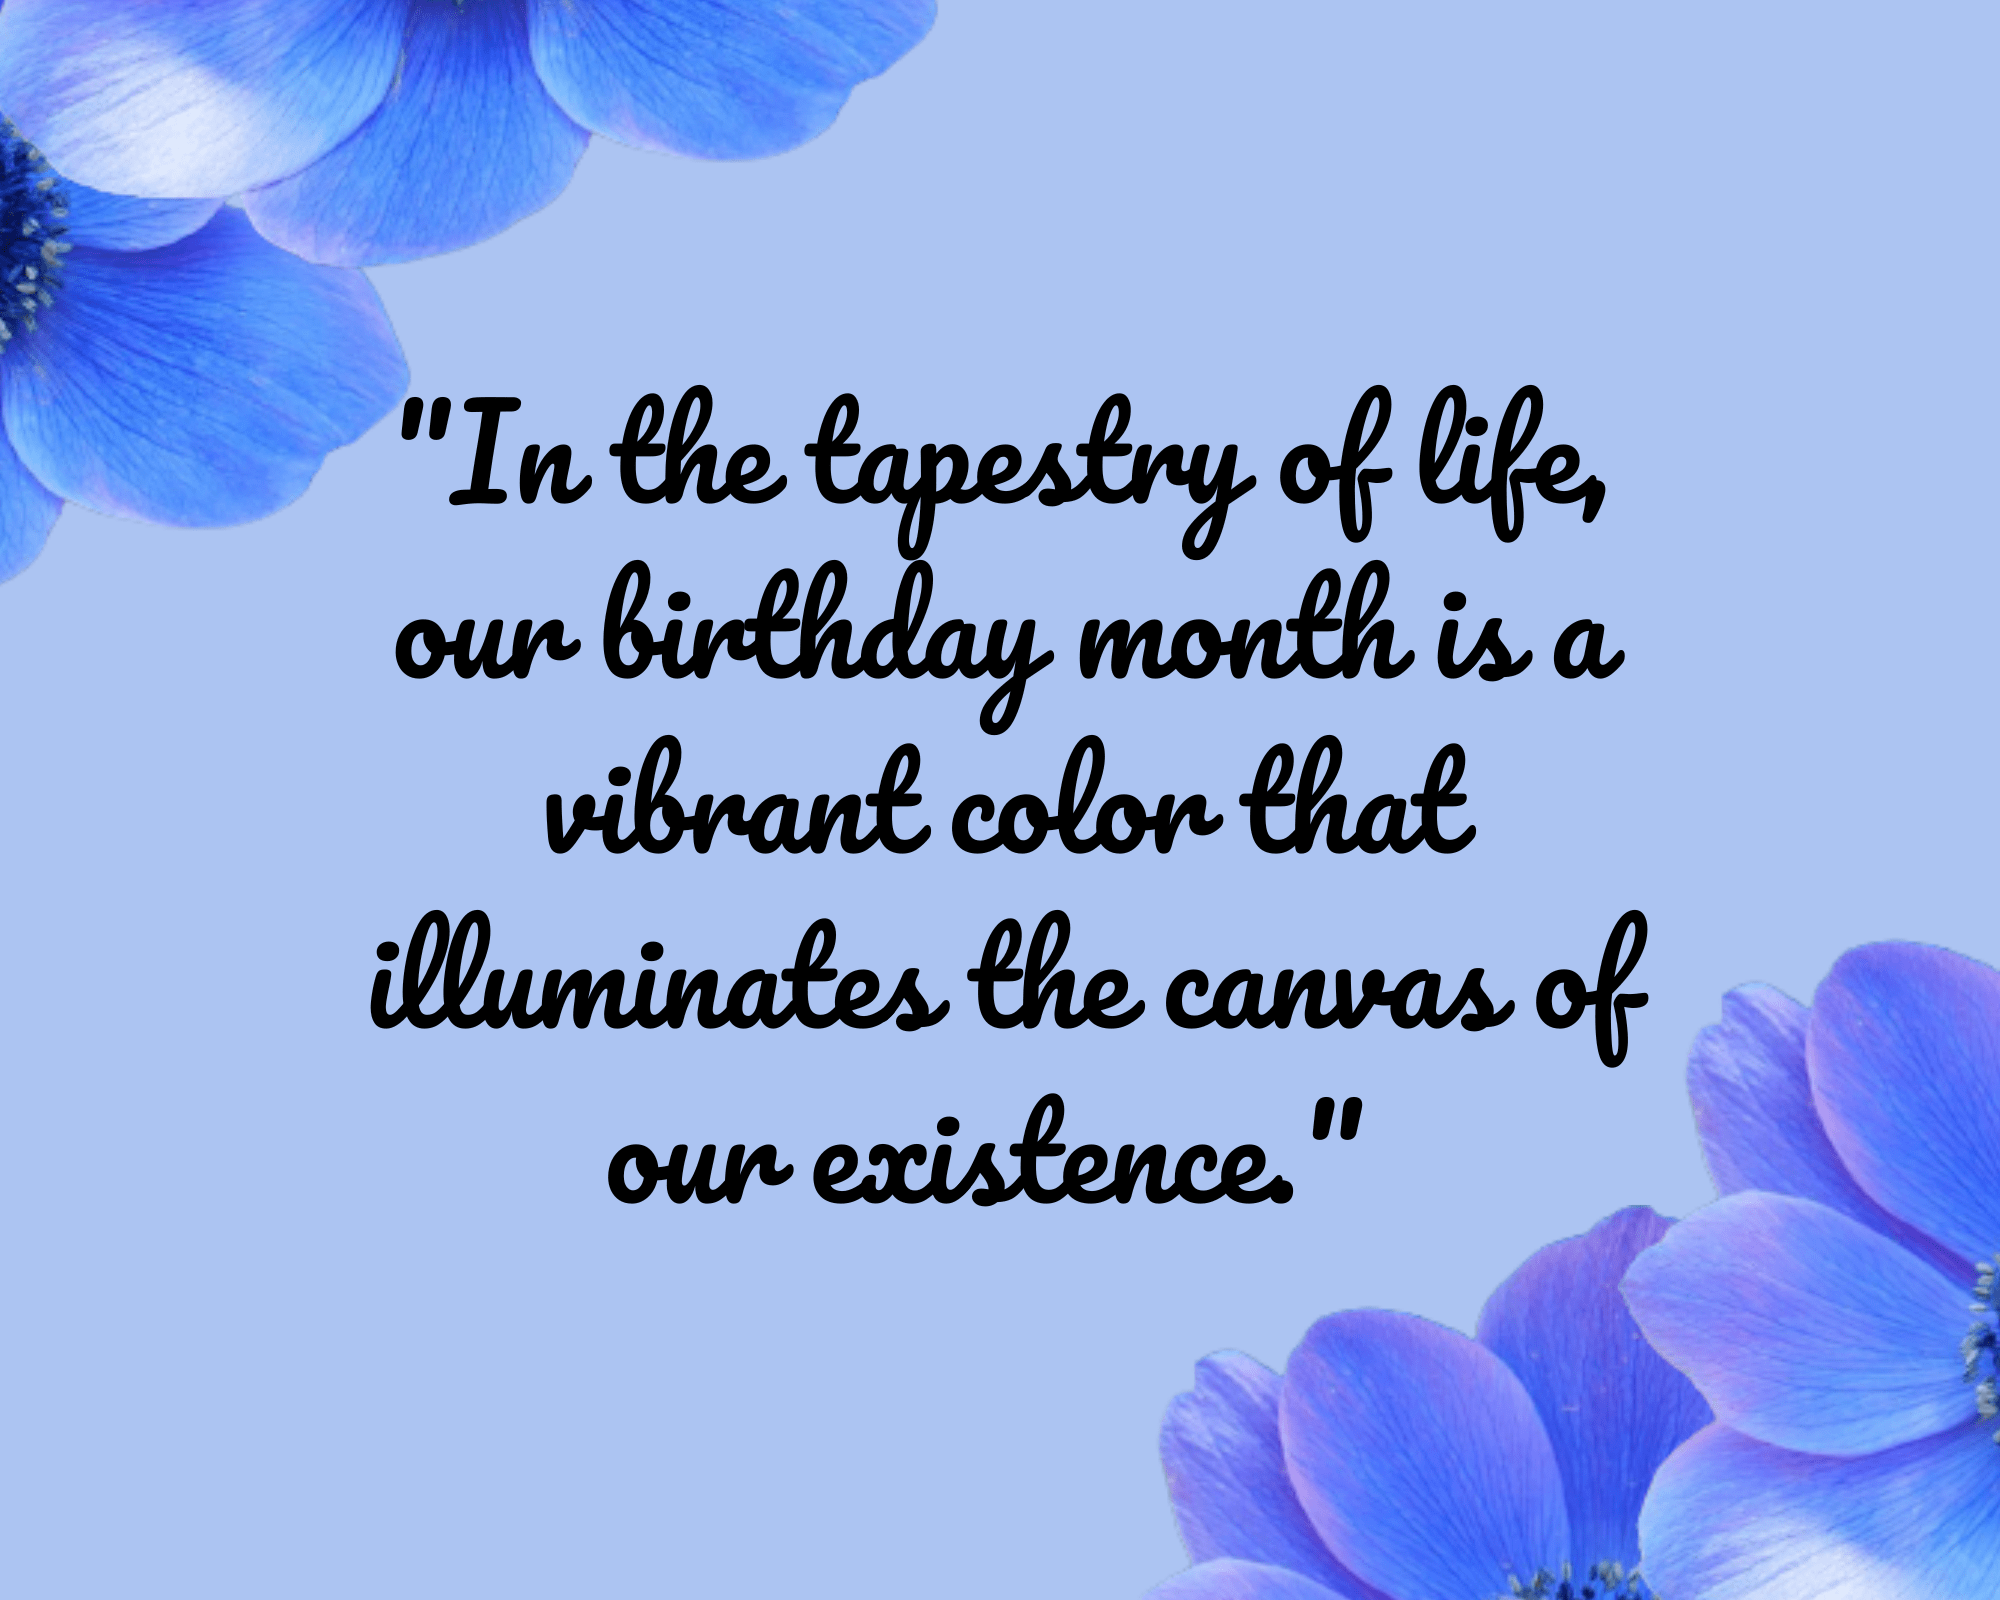 Birthday Month quotes illastorate color